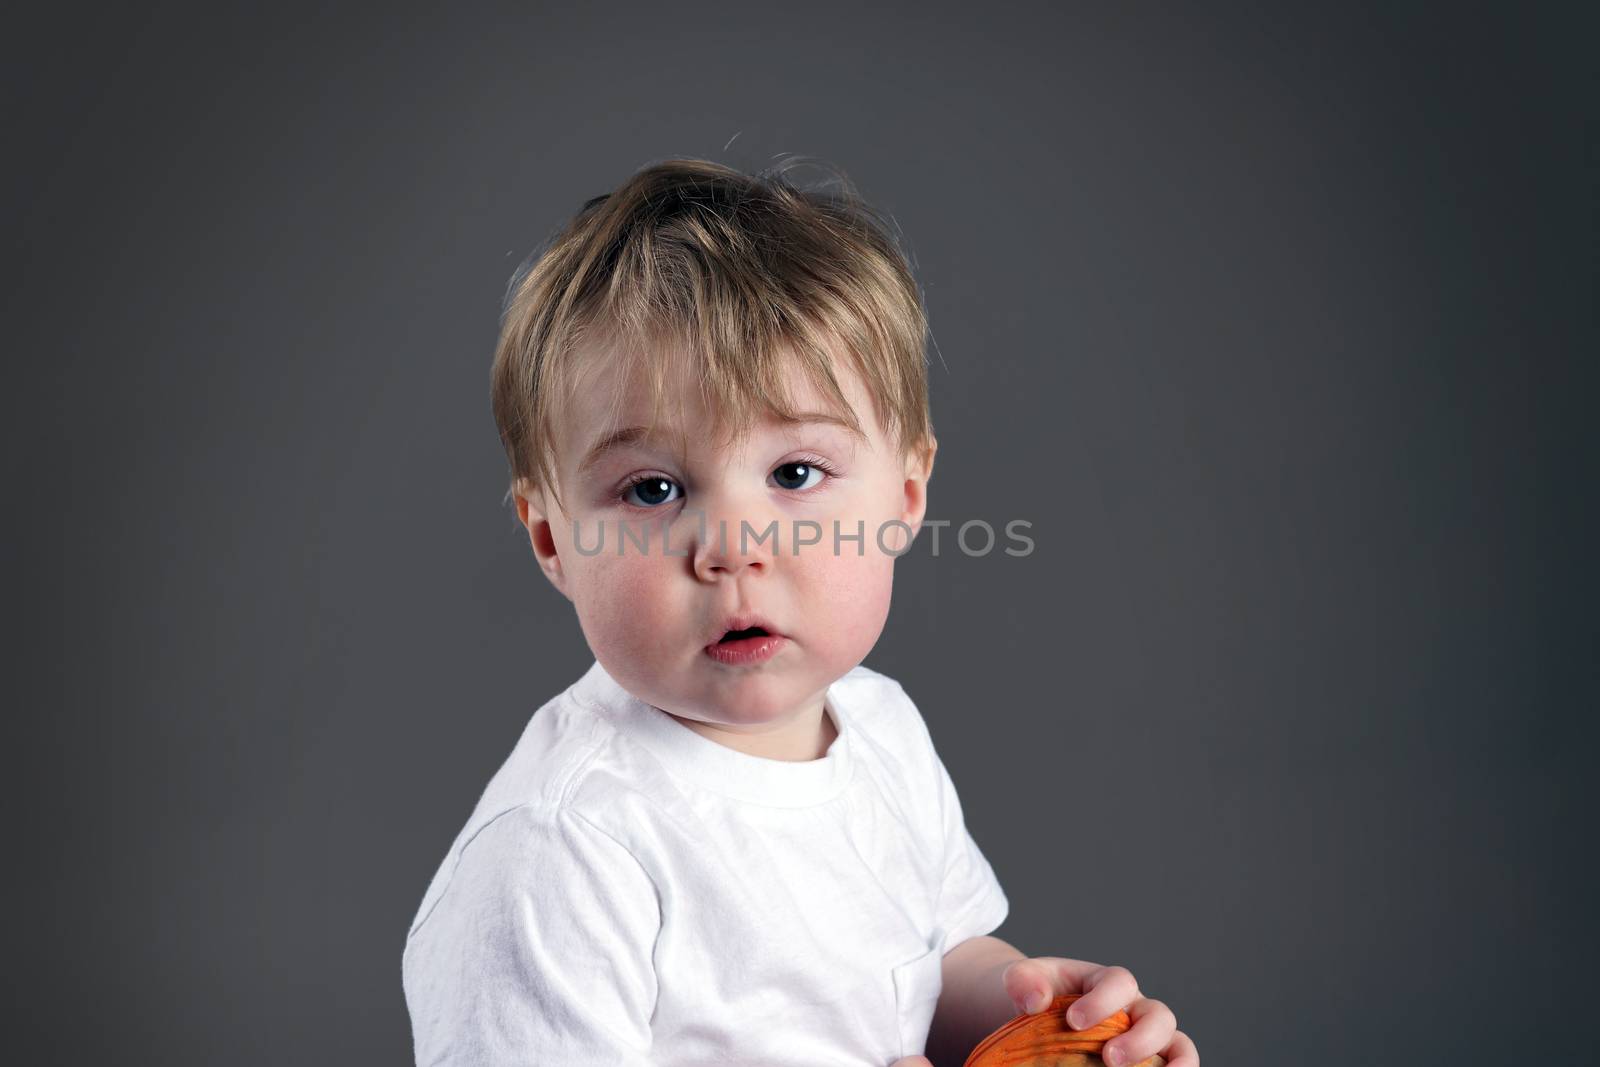 Little boy looking upset by Mirage3